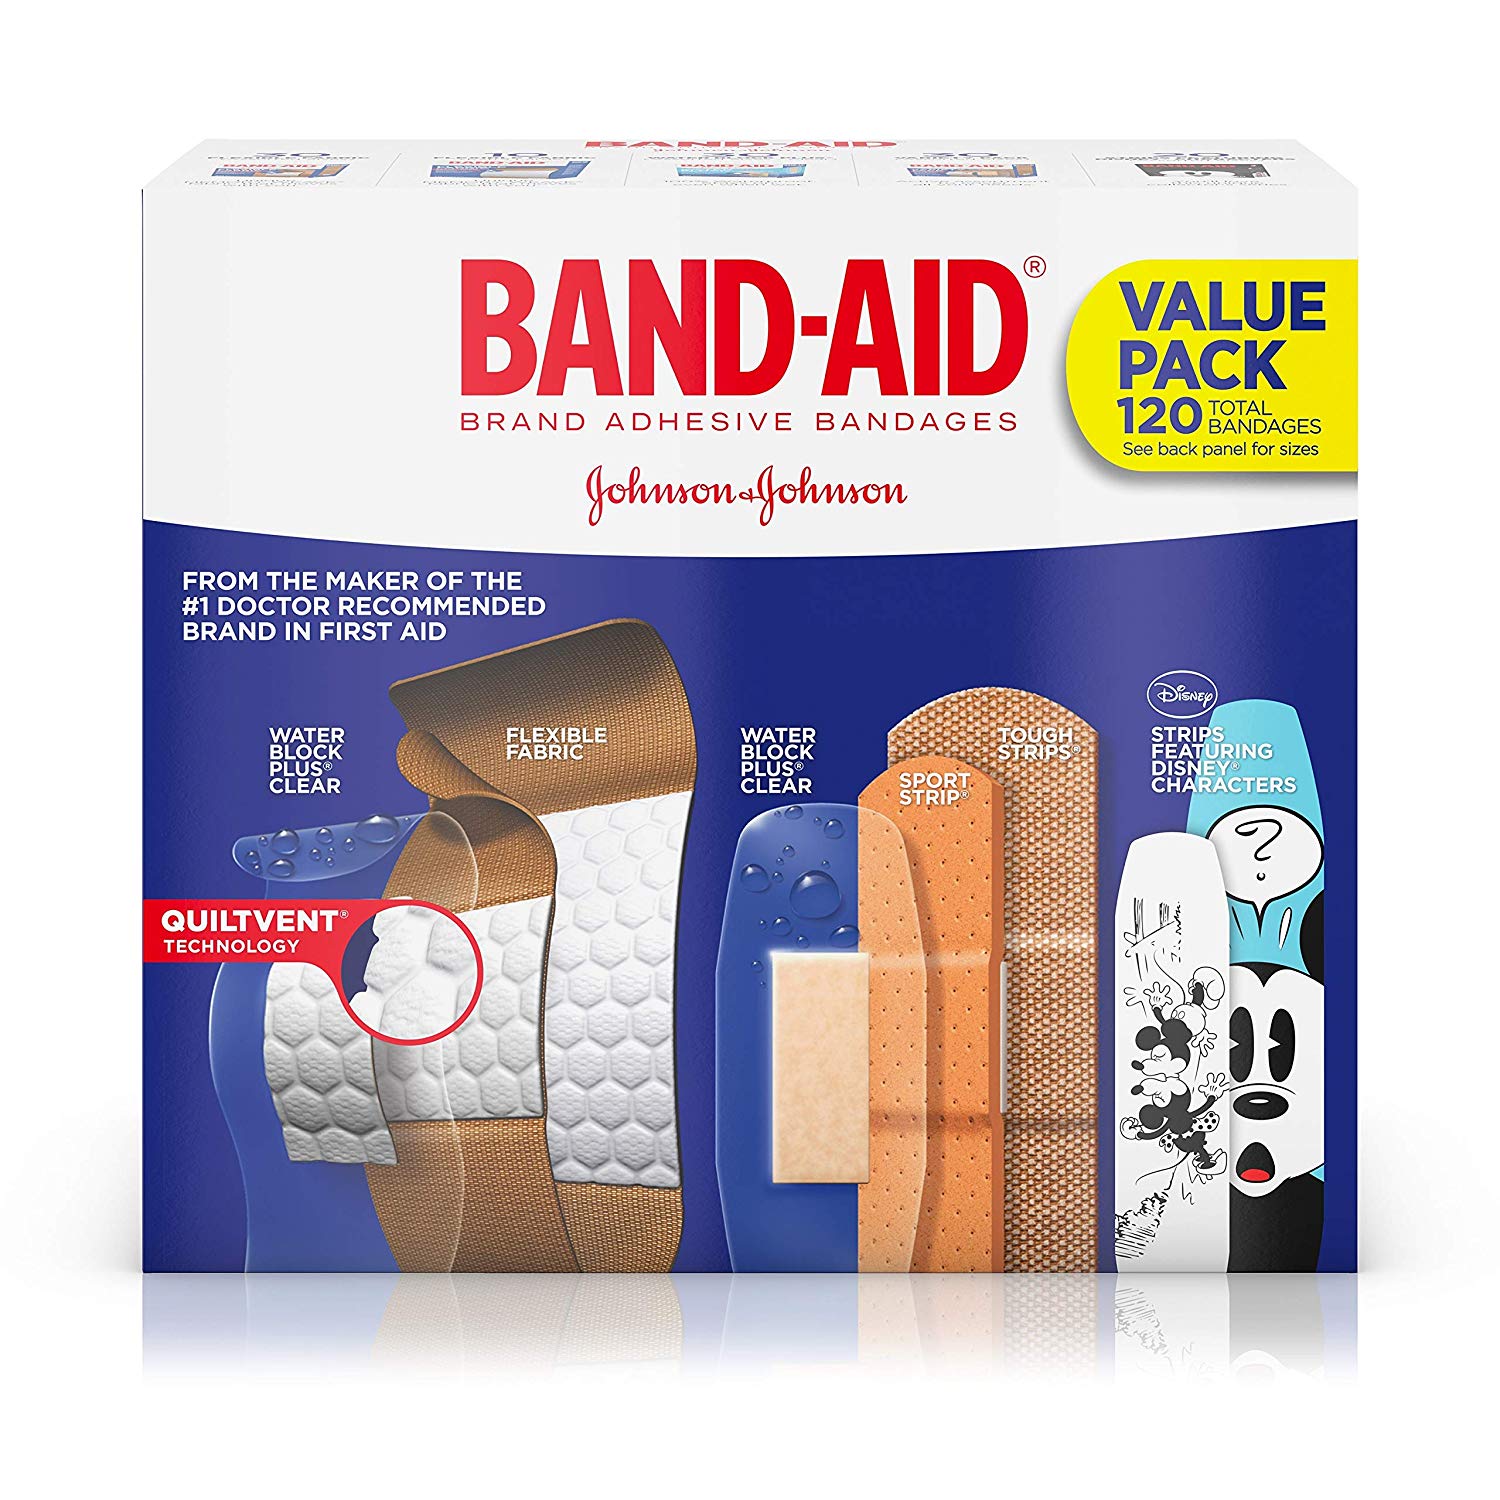 Band aid brand adhesive. Bandaid clipart box bandaid